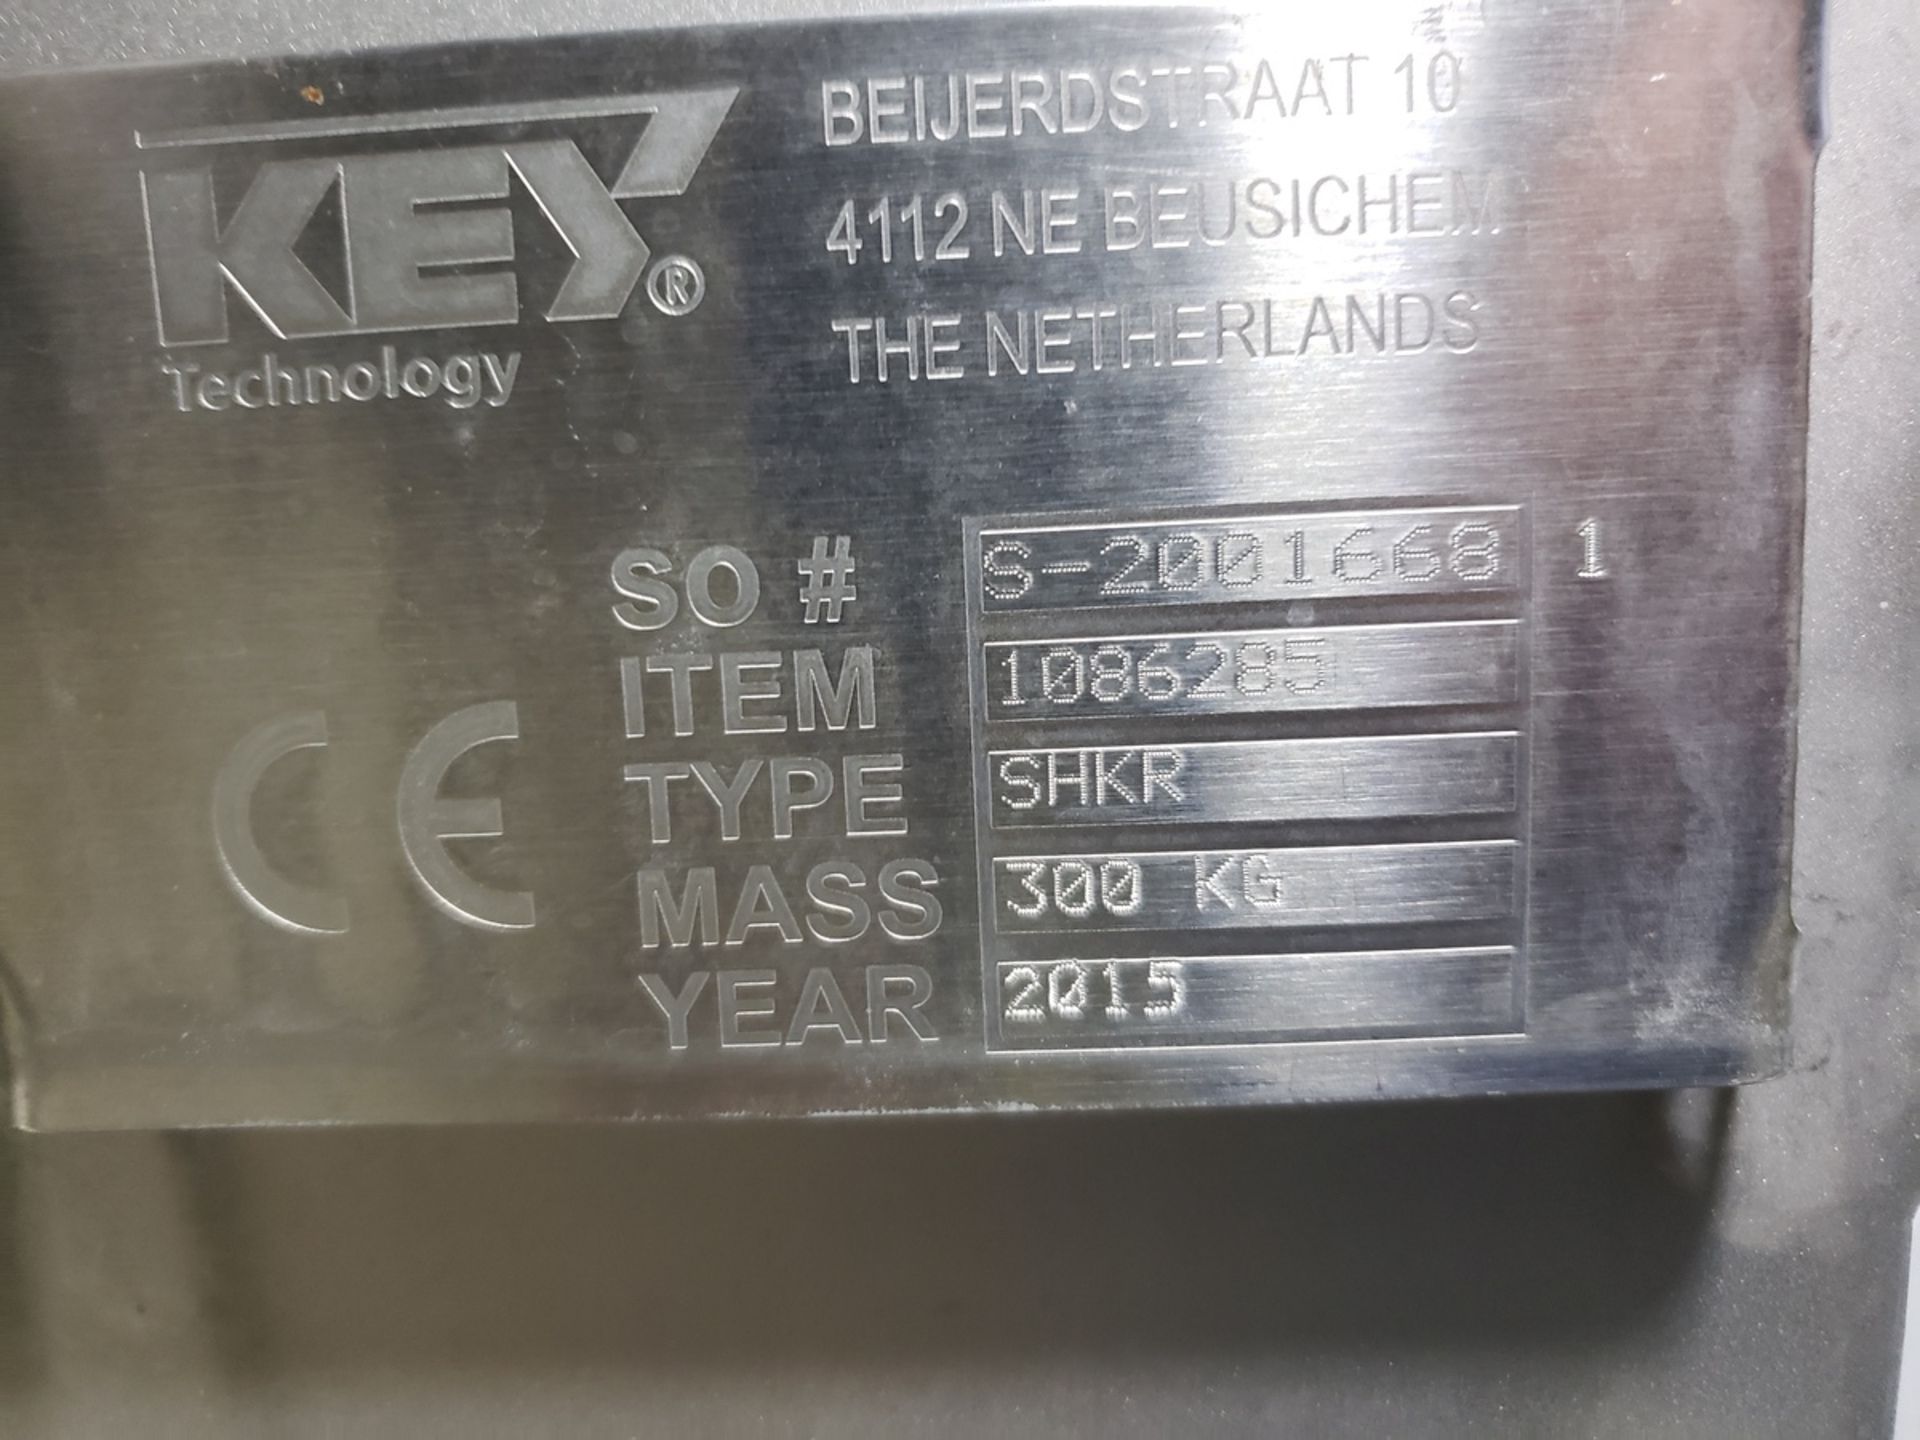 2015 Key Vibratory Conveyor, Approx 24" x 72" x 5.5" Deep to Screens - Subj to Bulk | Rig Fee: $500 - Image 2 of 2